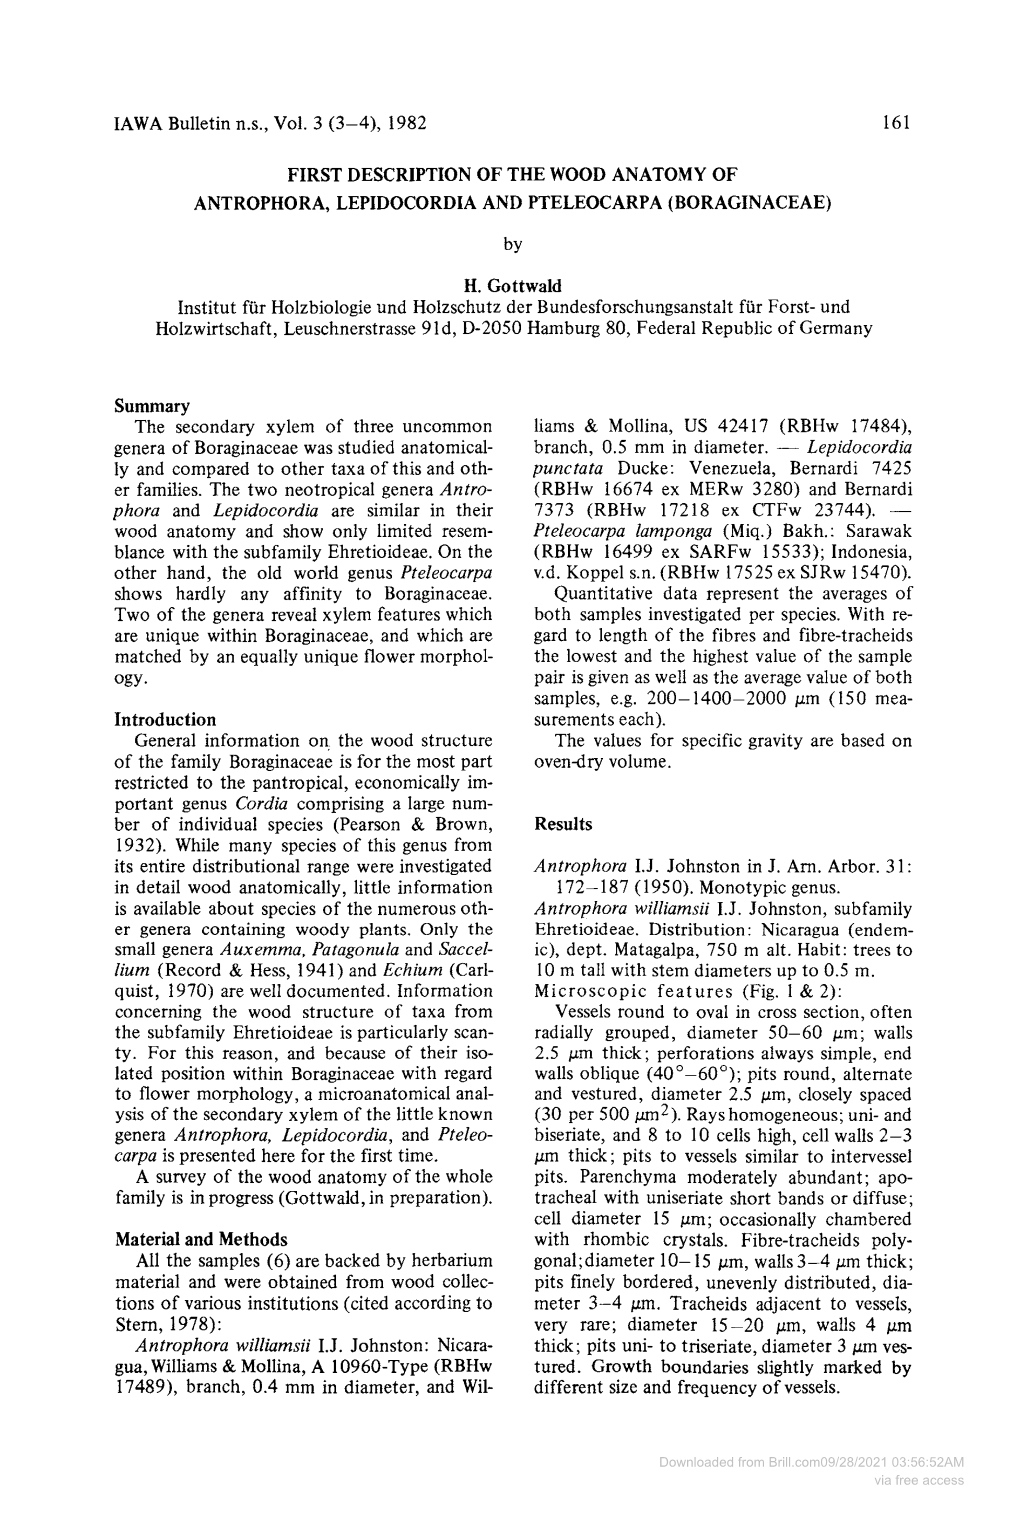 First Description of the Wood Anatomy of Antrophora, Lepidocordia and Pteleocarpa (Boraginaceae)